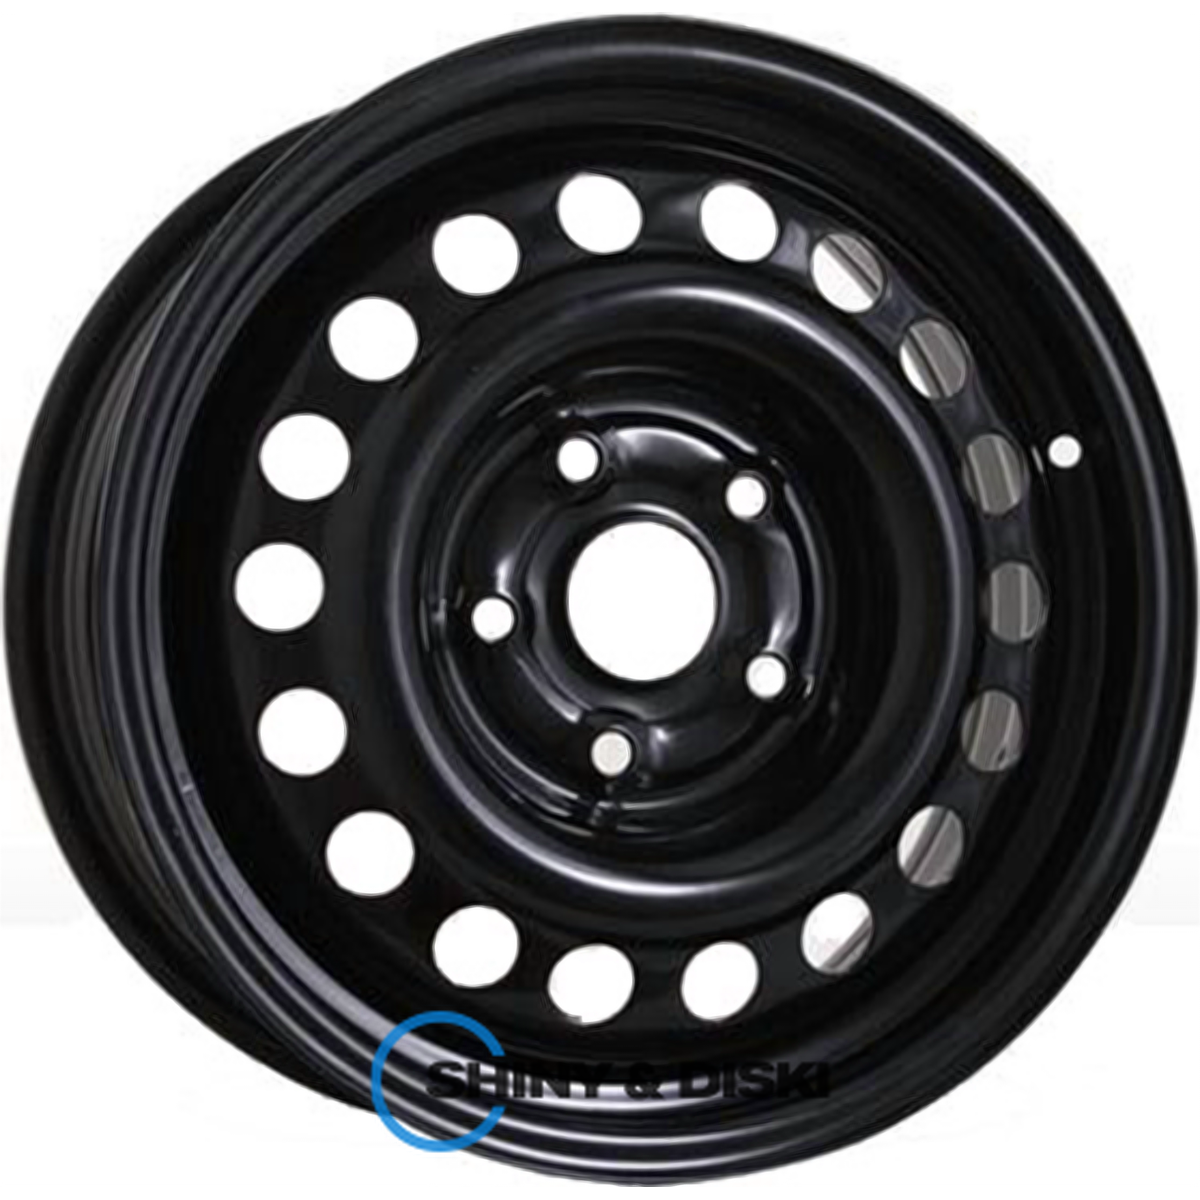 magnetto wheels 15004 b r15 w6 pcd5x112 et43 dia57.1